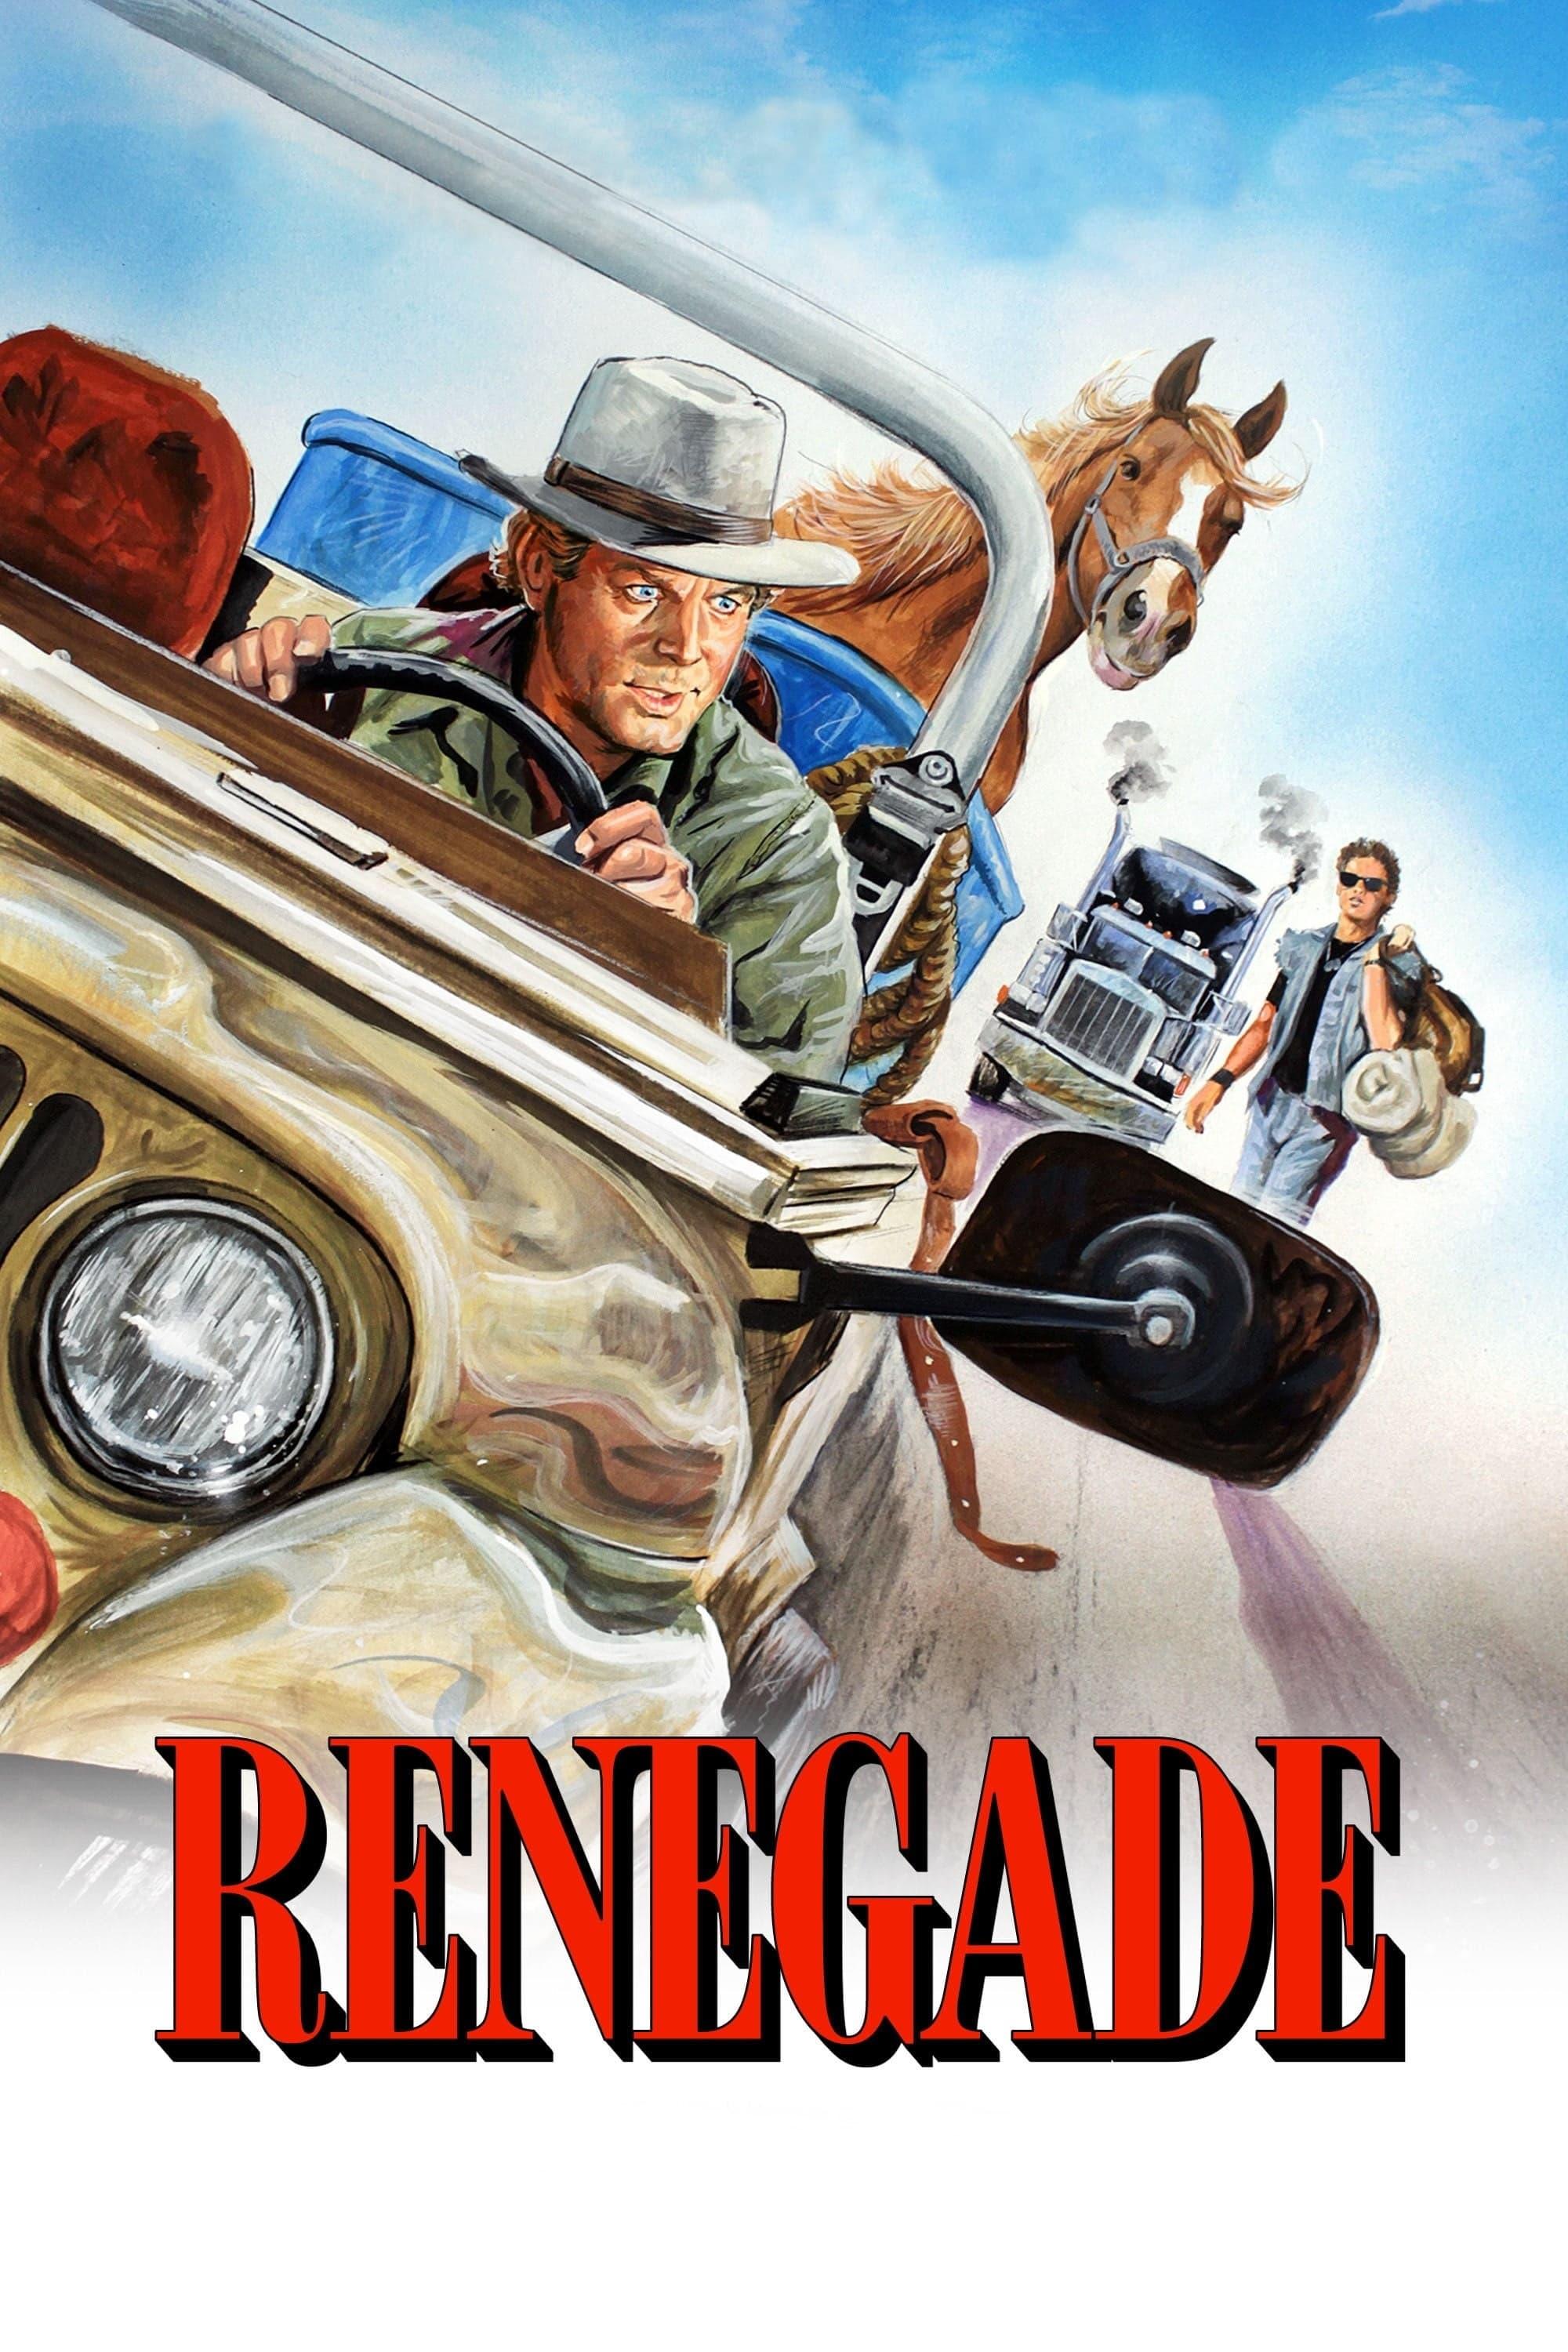 Renegade poster